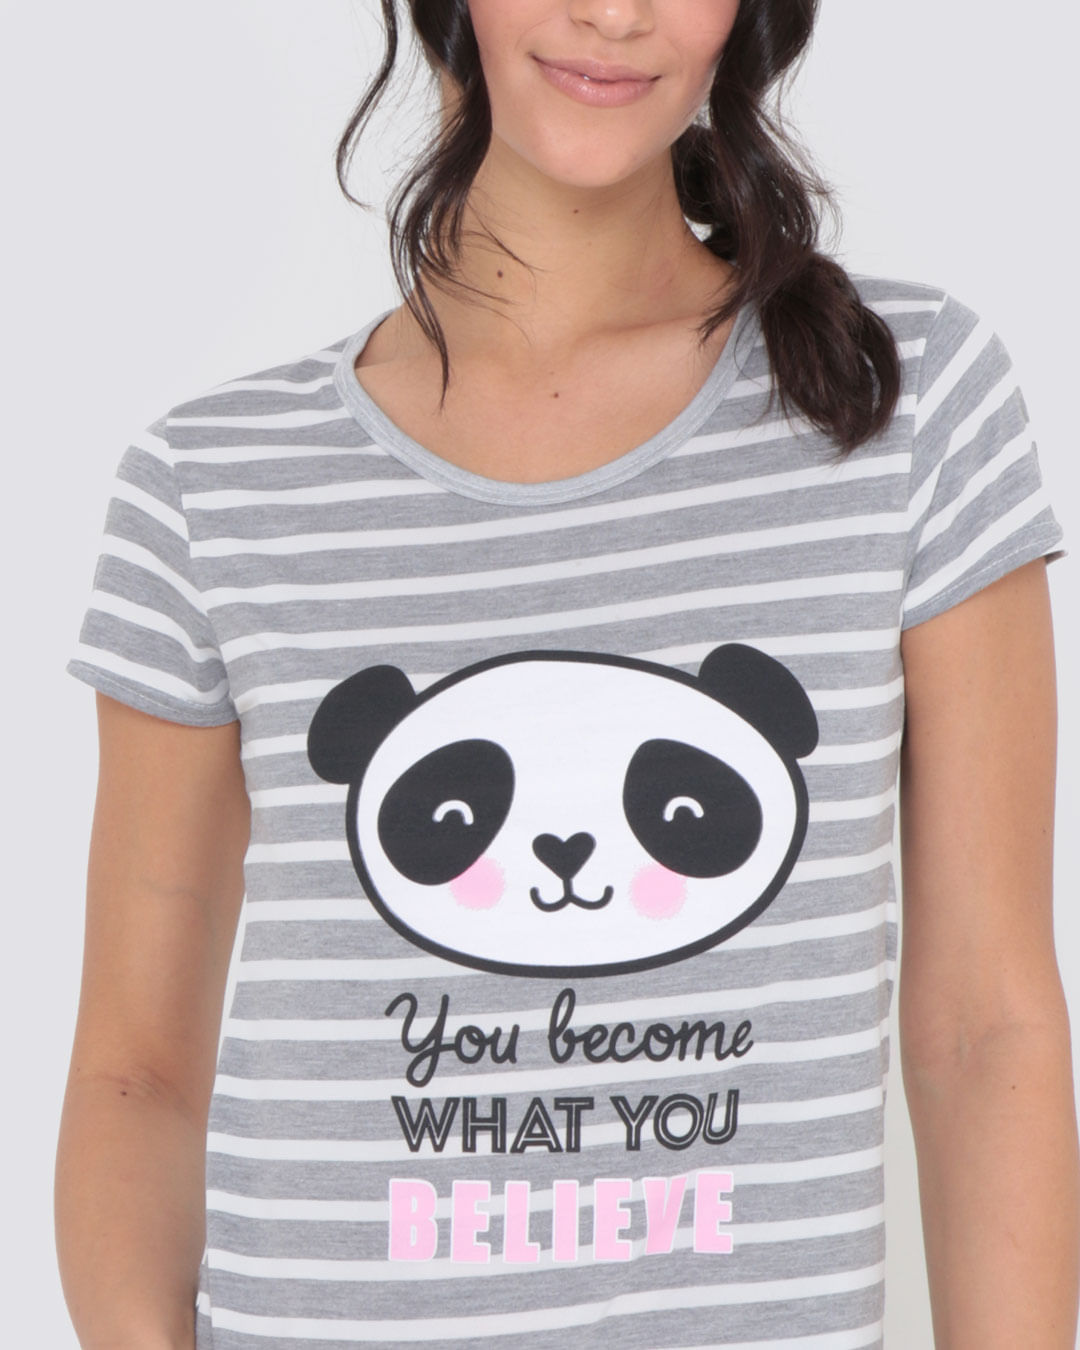 Pijama-Feminino-Curto-Listrado-Estampa-Panda-Cinza